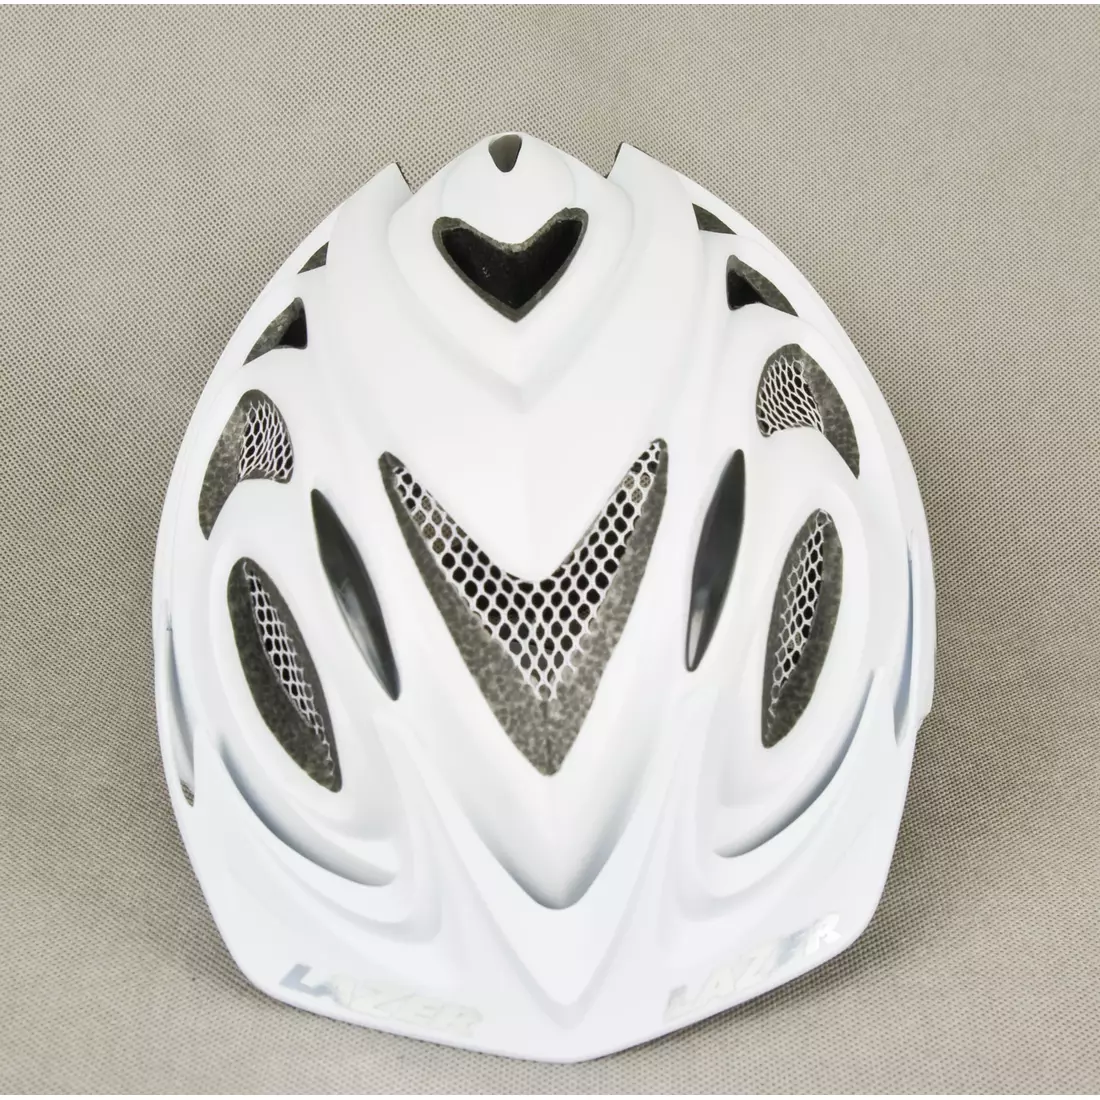 LAZER - 2X3M MTB bicycle helmet, color: white matt